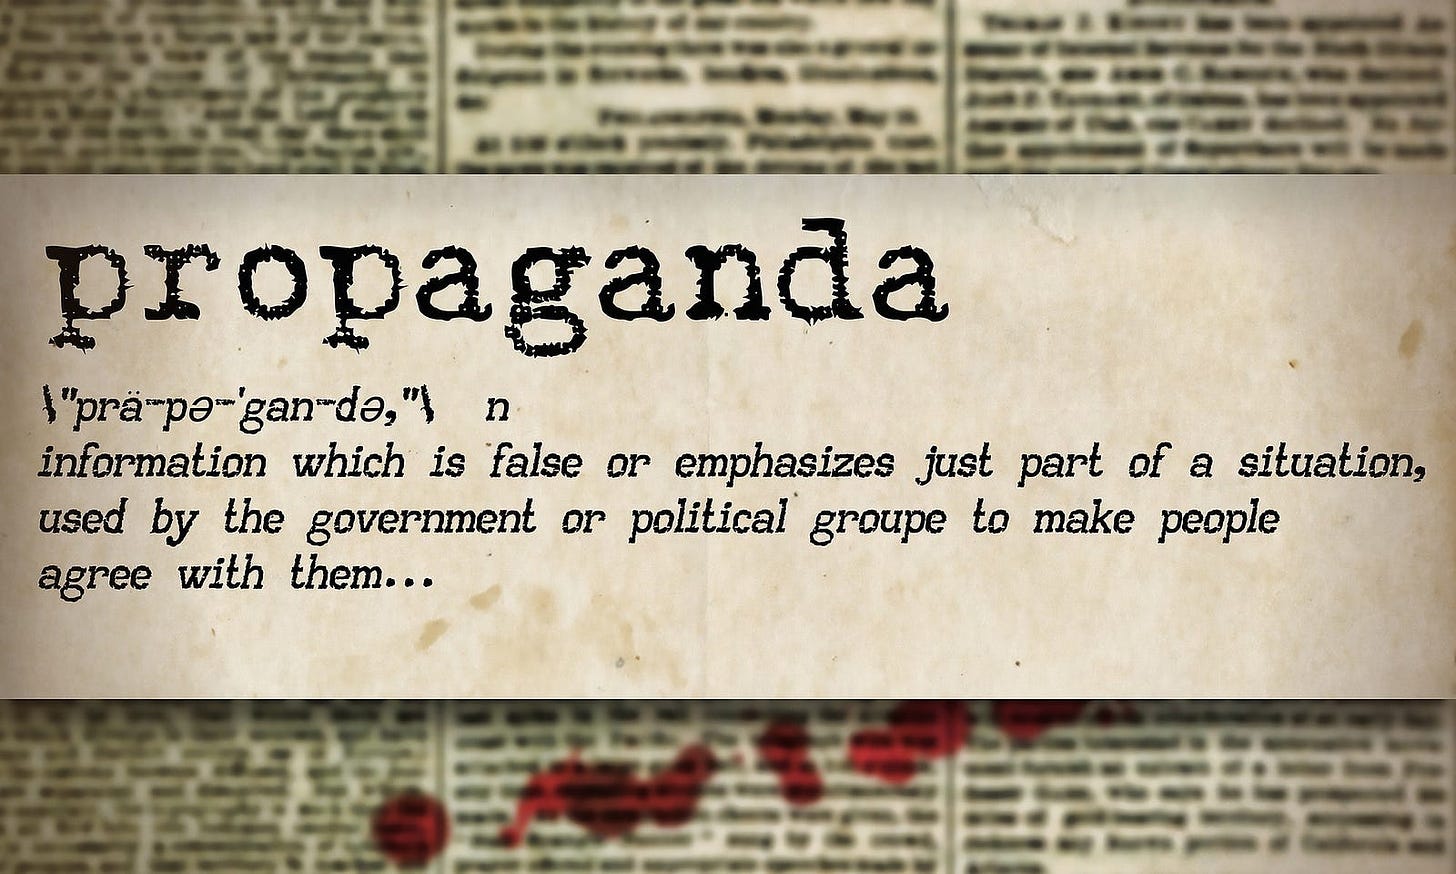 All media is propaganda and subject to bias - Leonox - Medium